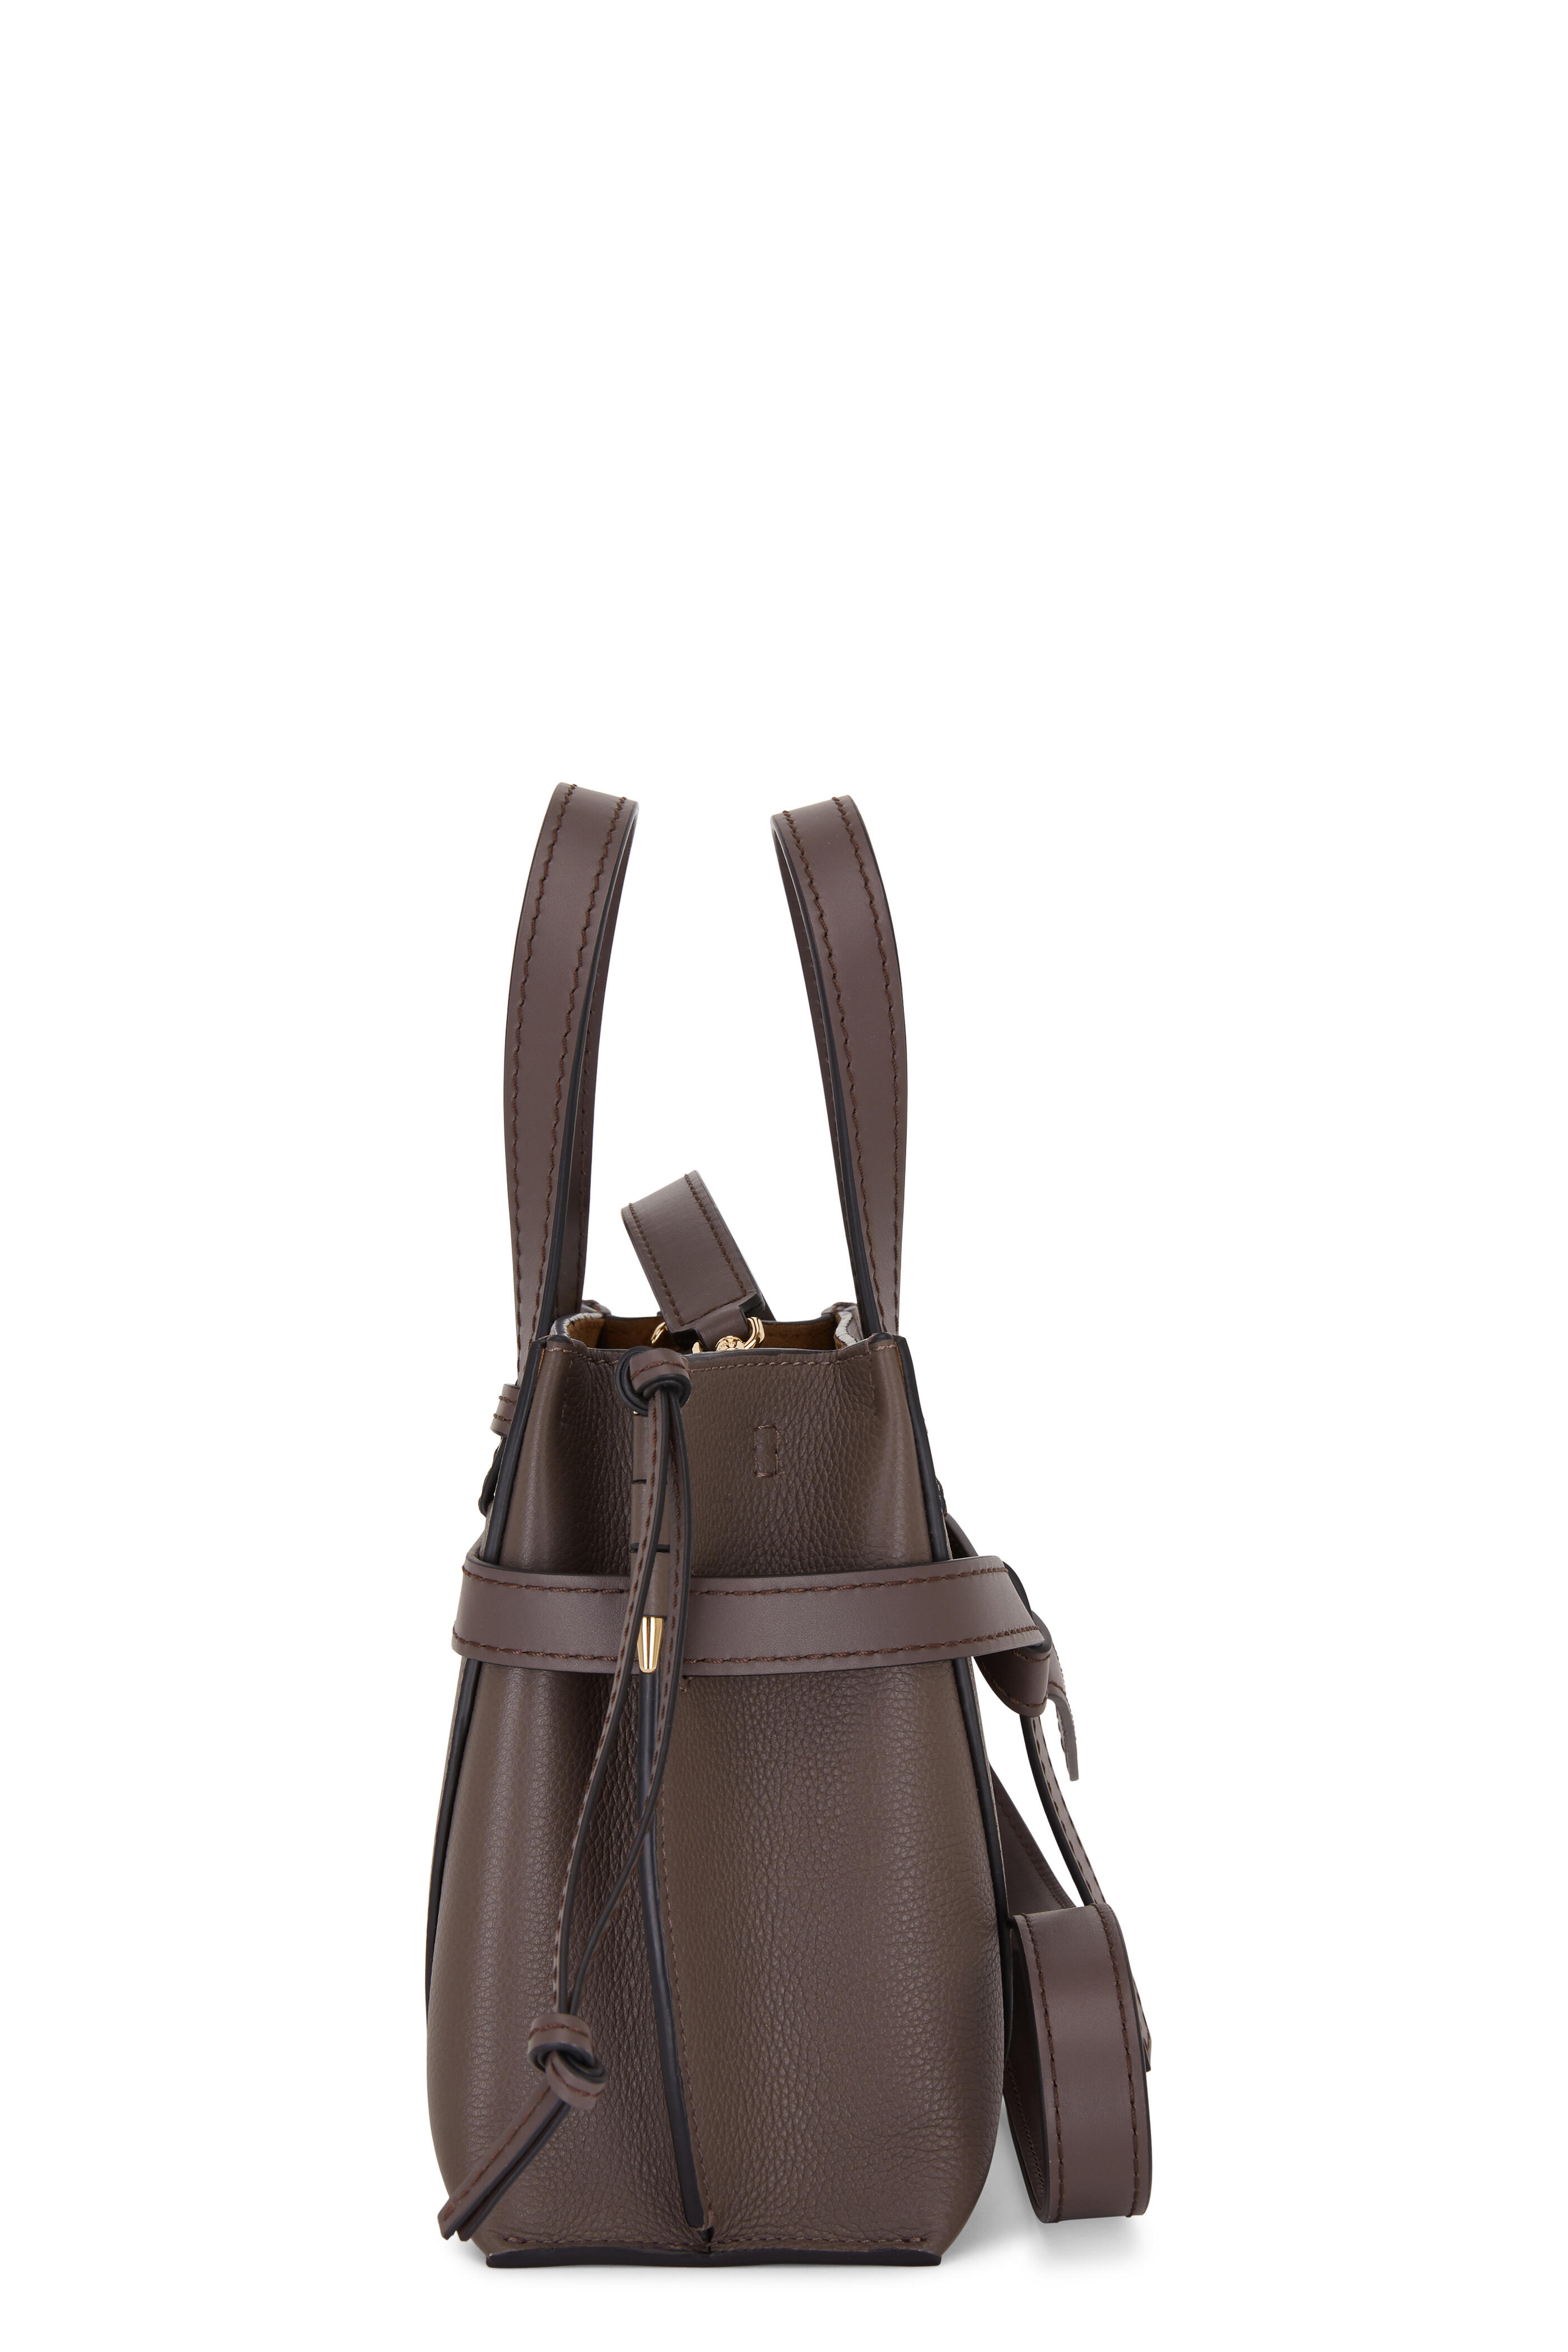 LOEWE dark taupe leather SMALL HAMMOCK Shoulder Bag For Sale at